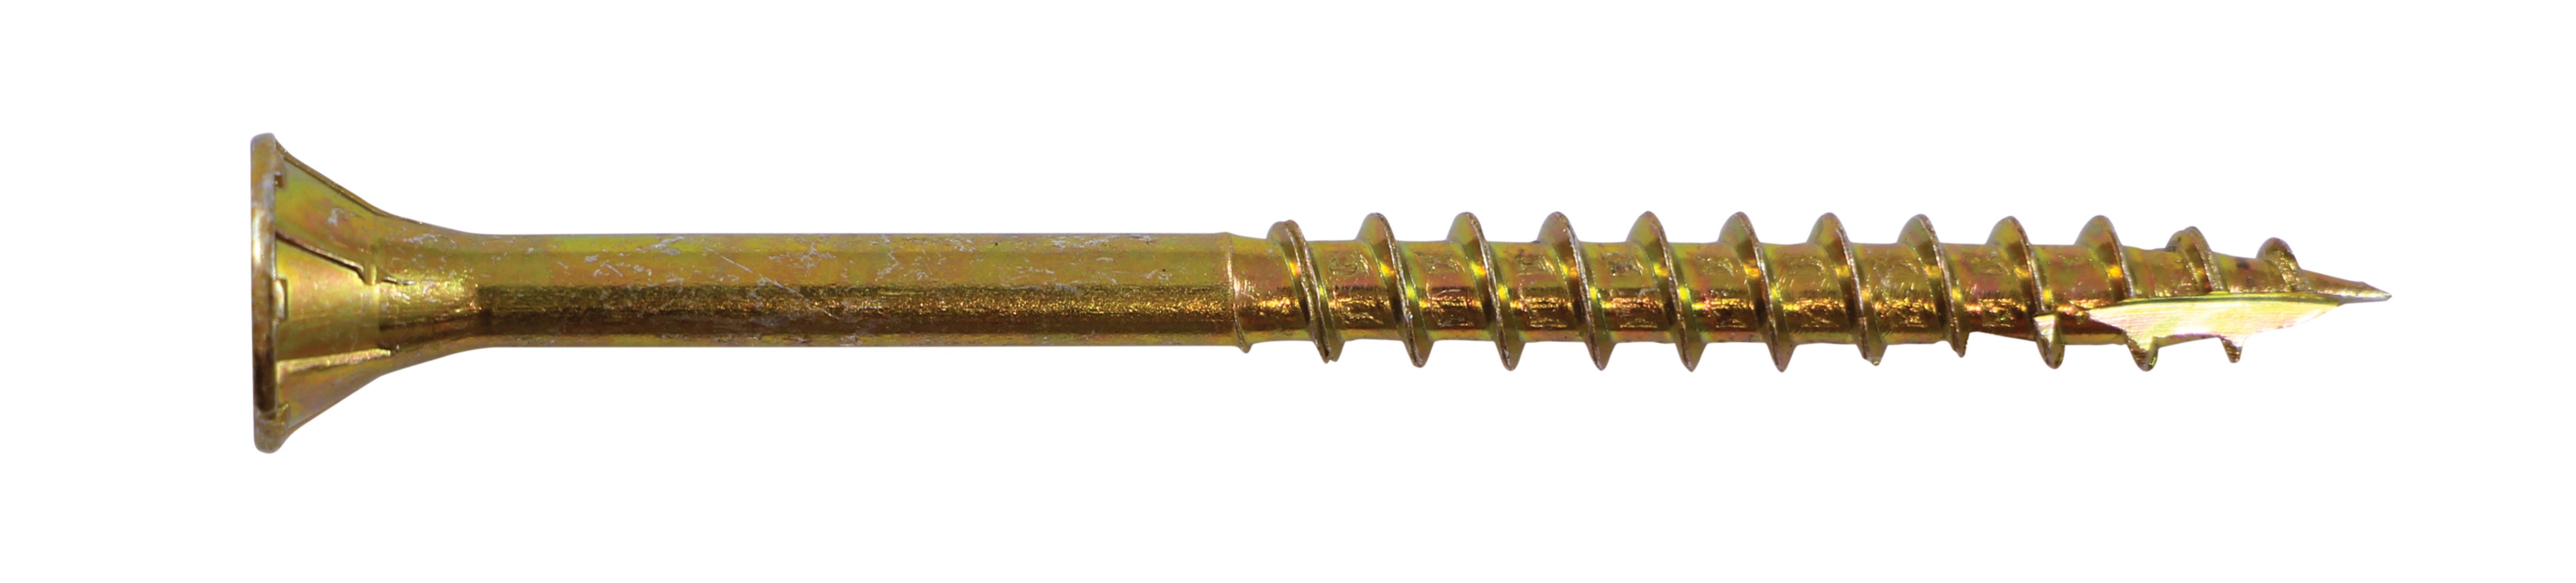 Image of Timco C2 Flooring Screws - 4.2 x 55mm Pack of 250